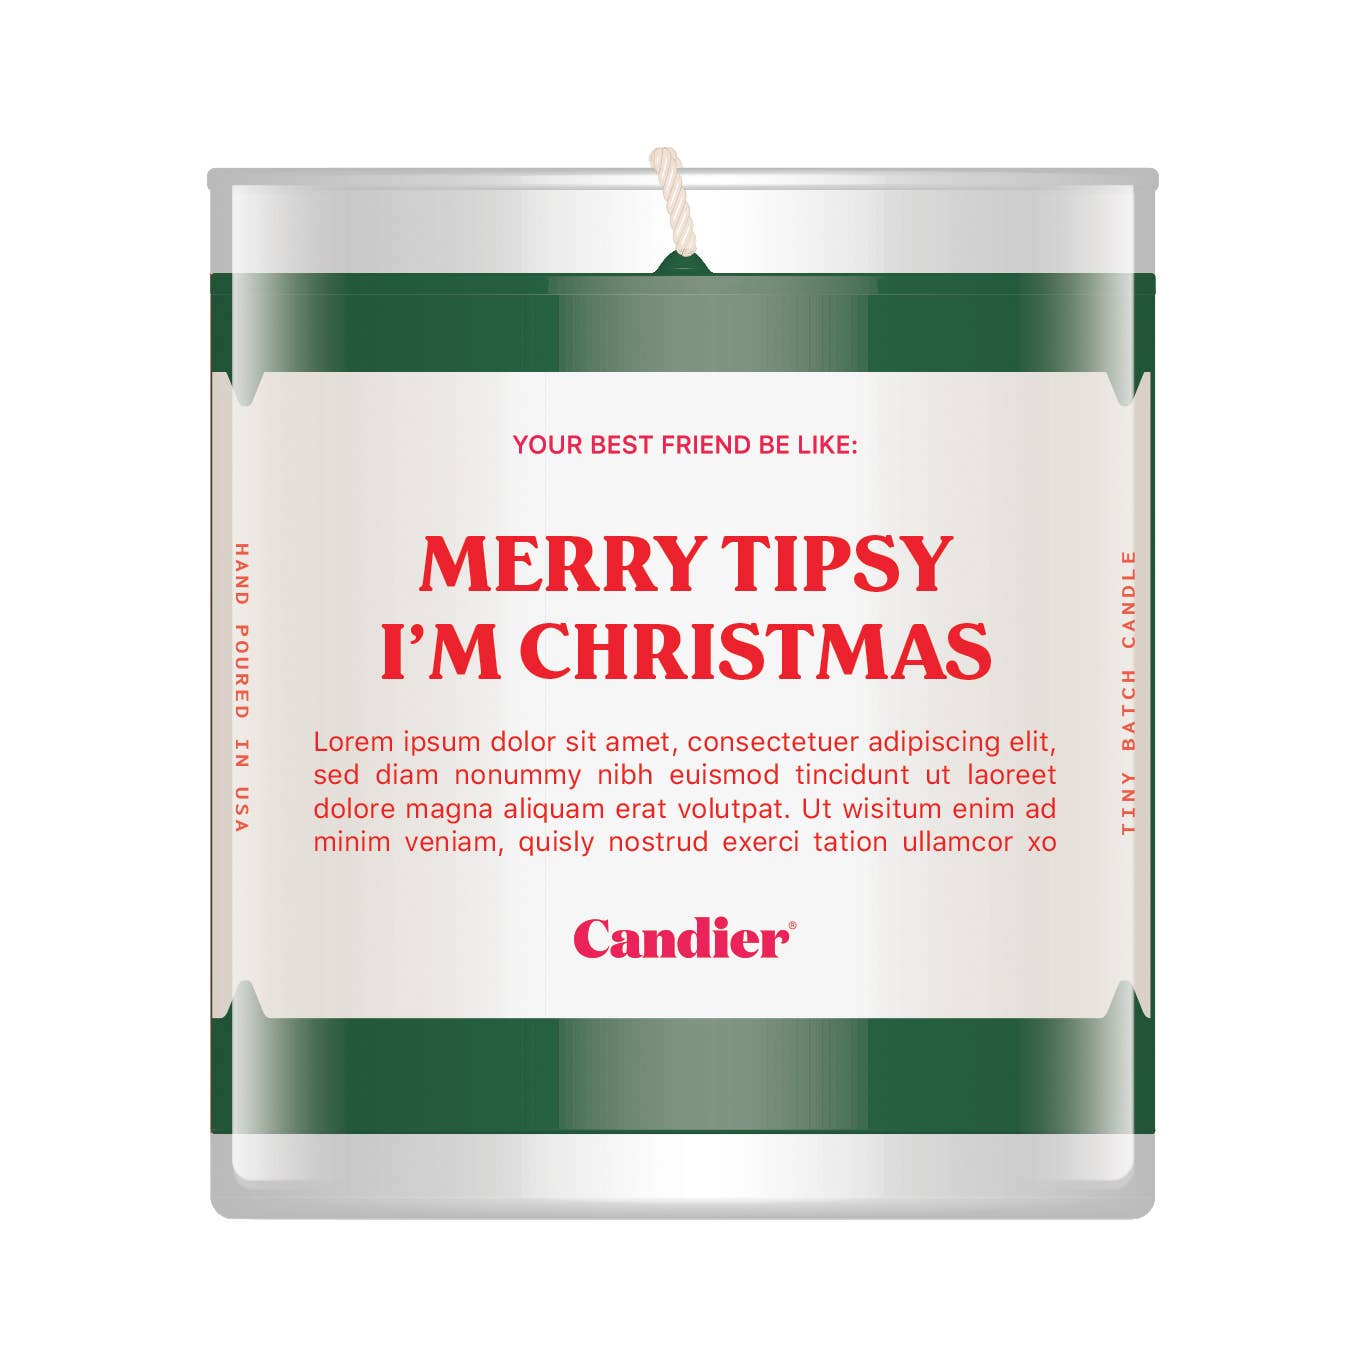 Merry Tipsy I'm Christmas